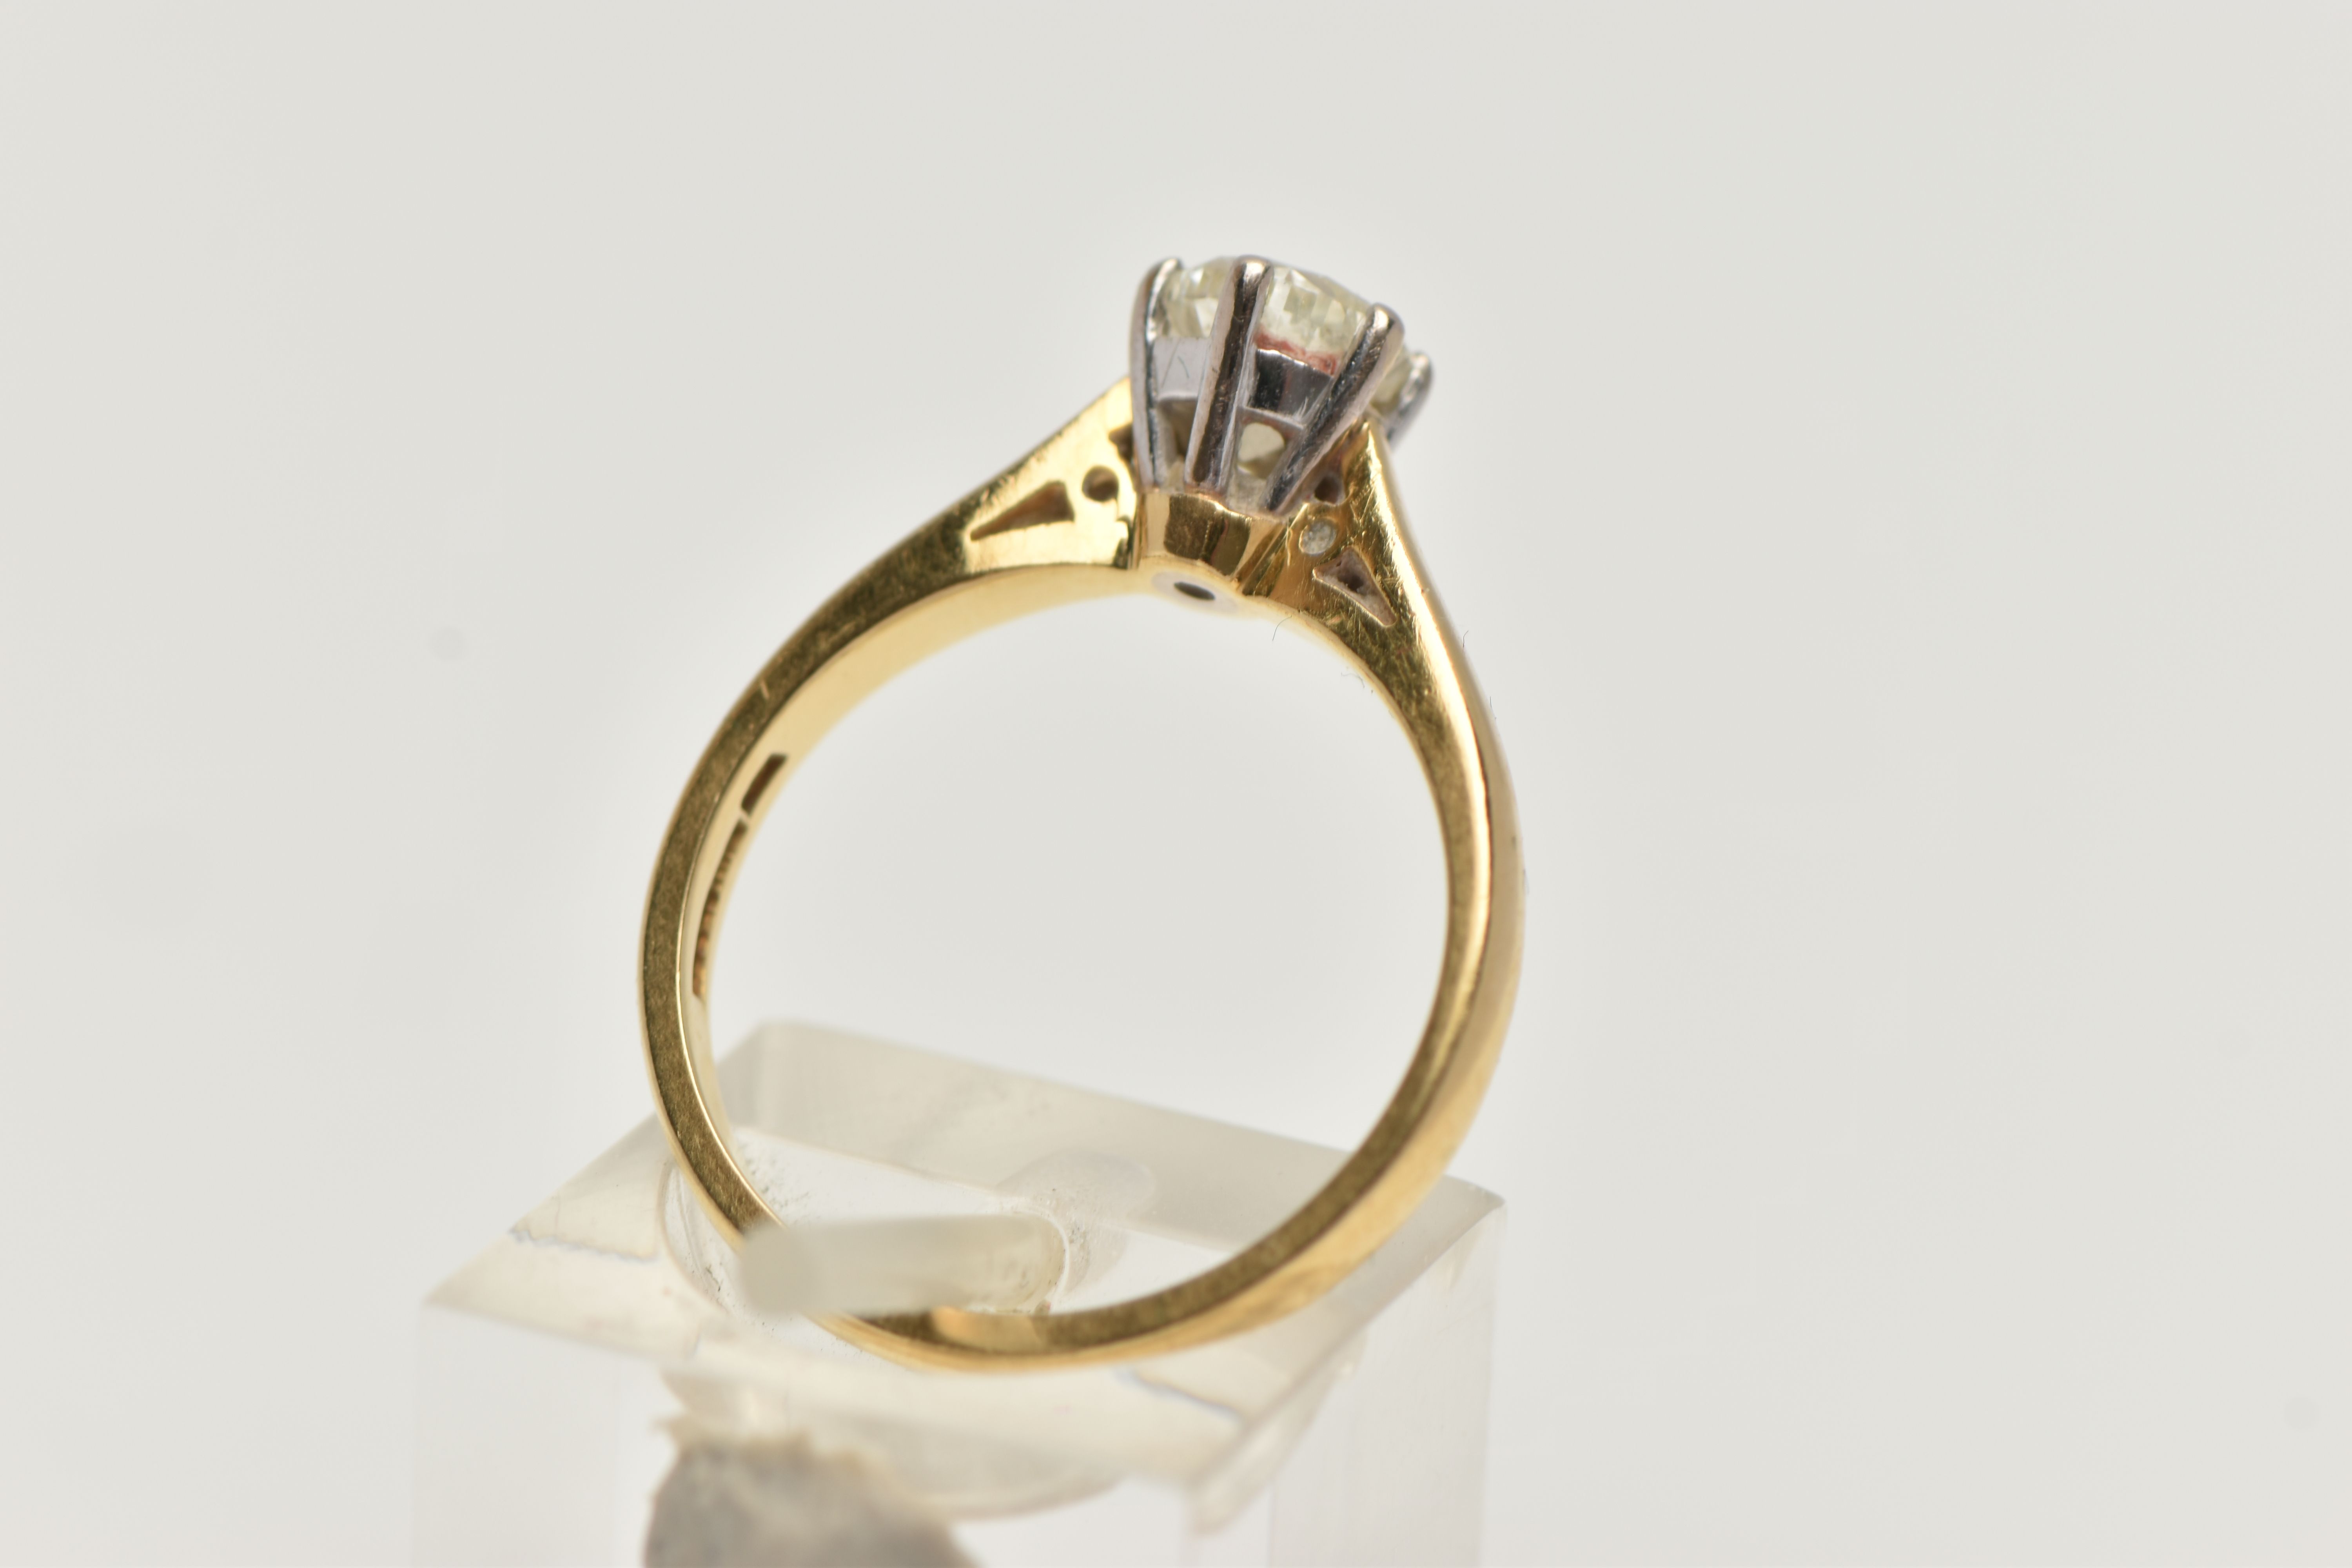 AN 18CT GOLD, SINGLE STONE DIAMOND RING, round brilliant cut diamond, estimated diamond weight 0. - Image 3 of 4